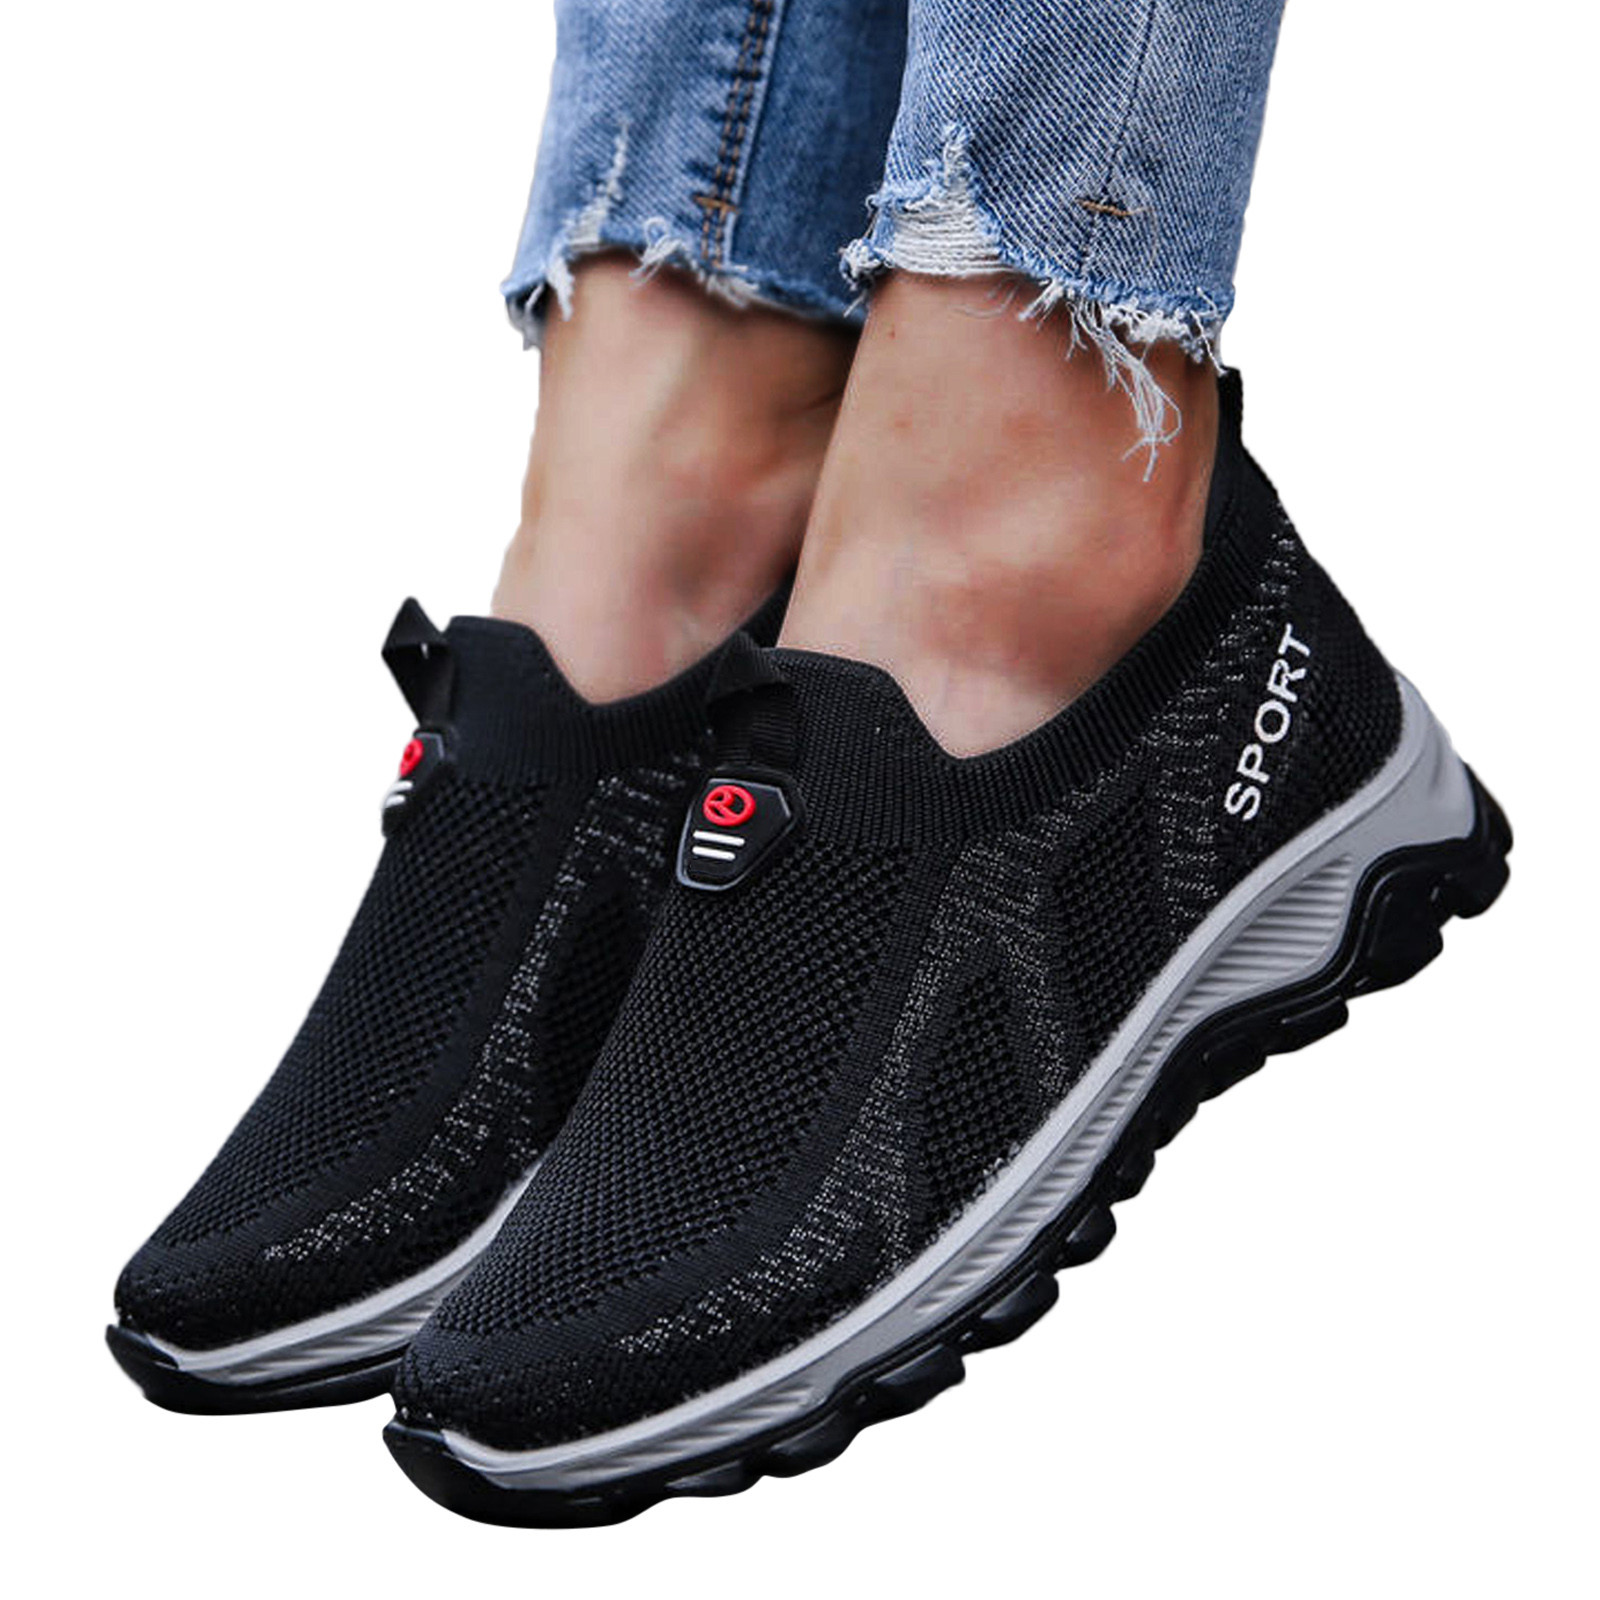 dmqupv Womens Comfort Shoes Womens Casual Shoes Size 8 Black Sneaker For Women Mesh Running Shoes Tennis Man Casual Shoe Black 6.5 - image 3 of 5